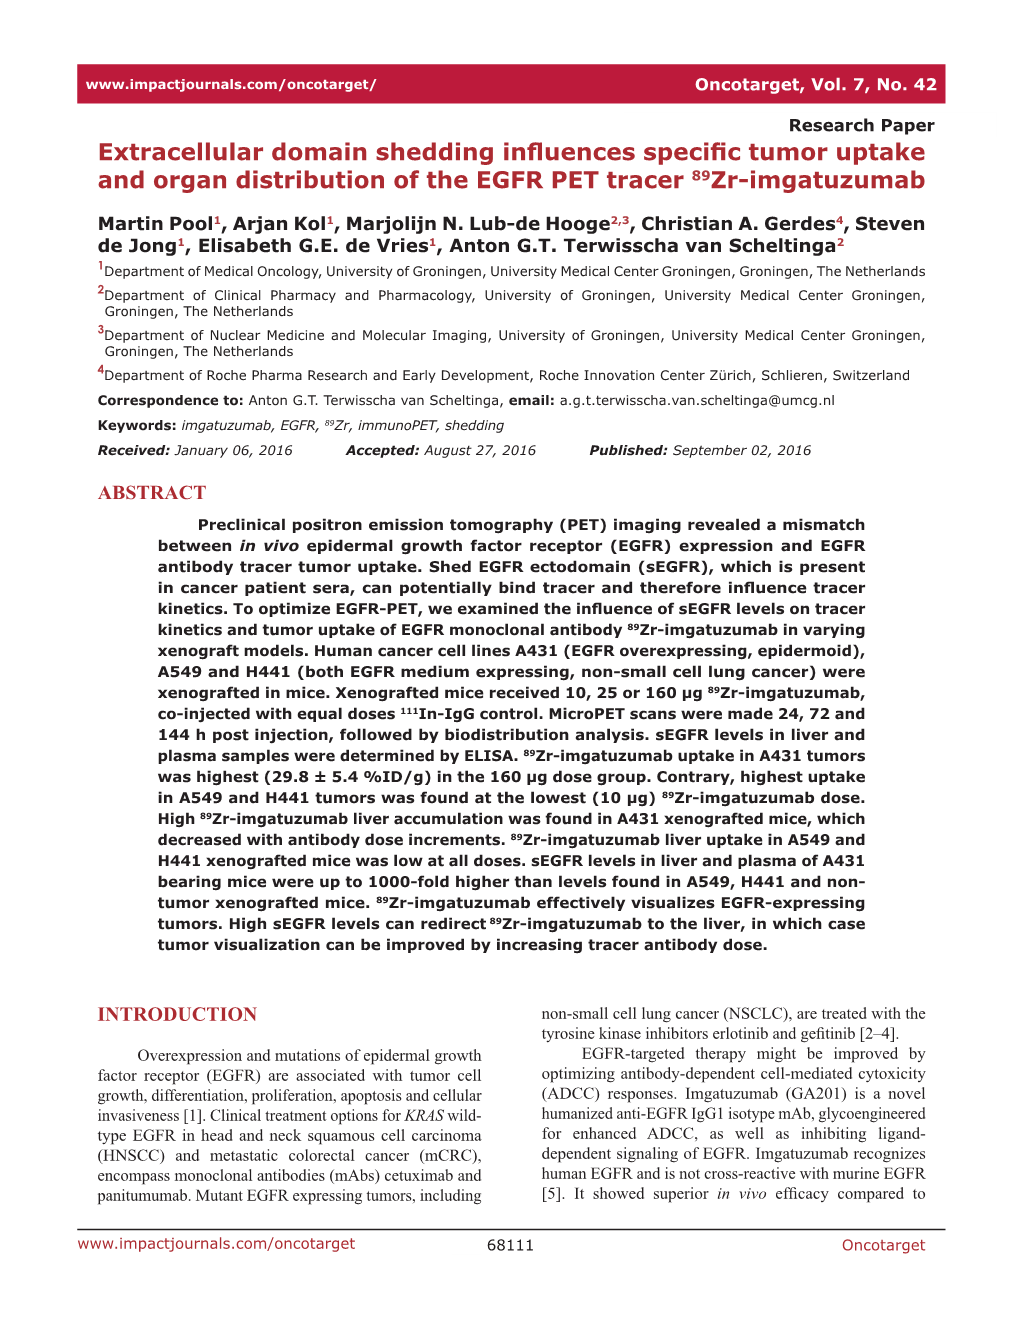 Extracellular Domain Shedding Influences Specific Tumor Uptake and Organ Distribution of the EGFR PET Tracer 89Zr-Imgatuzumab